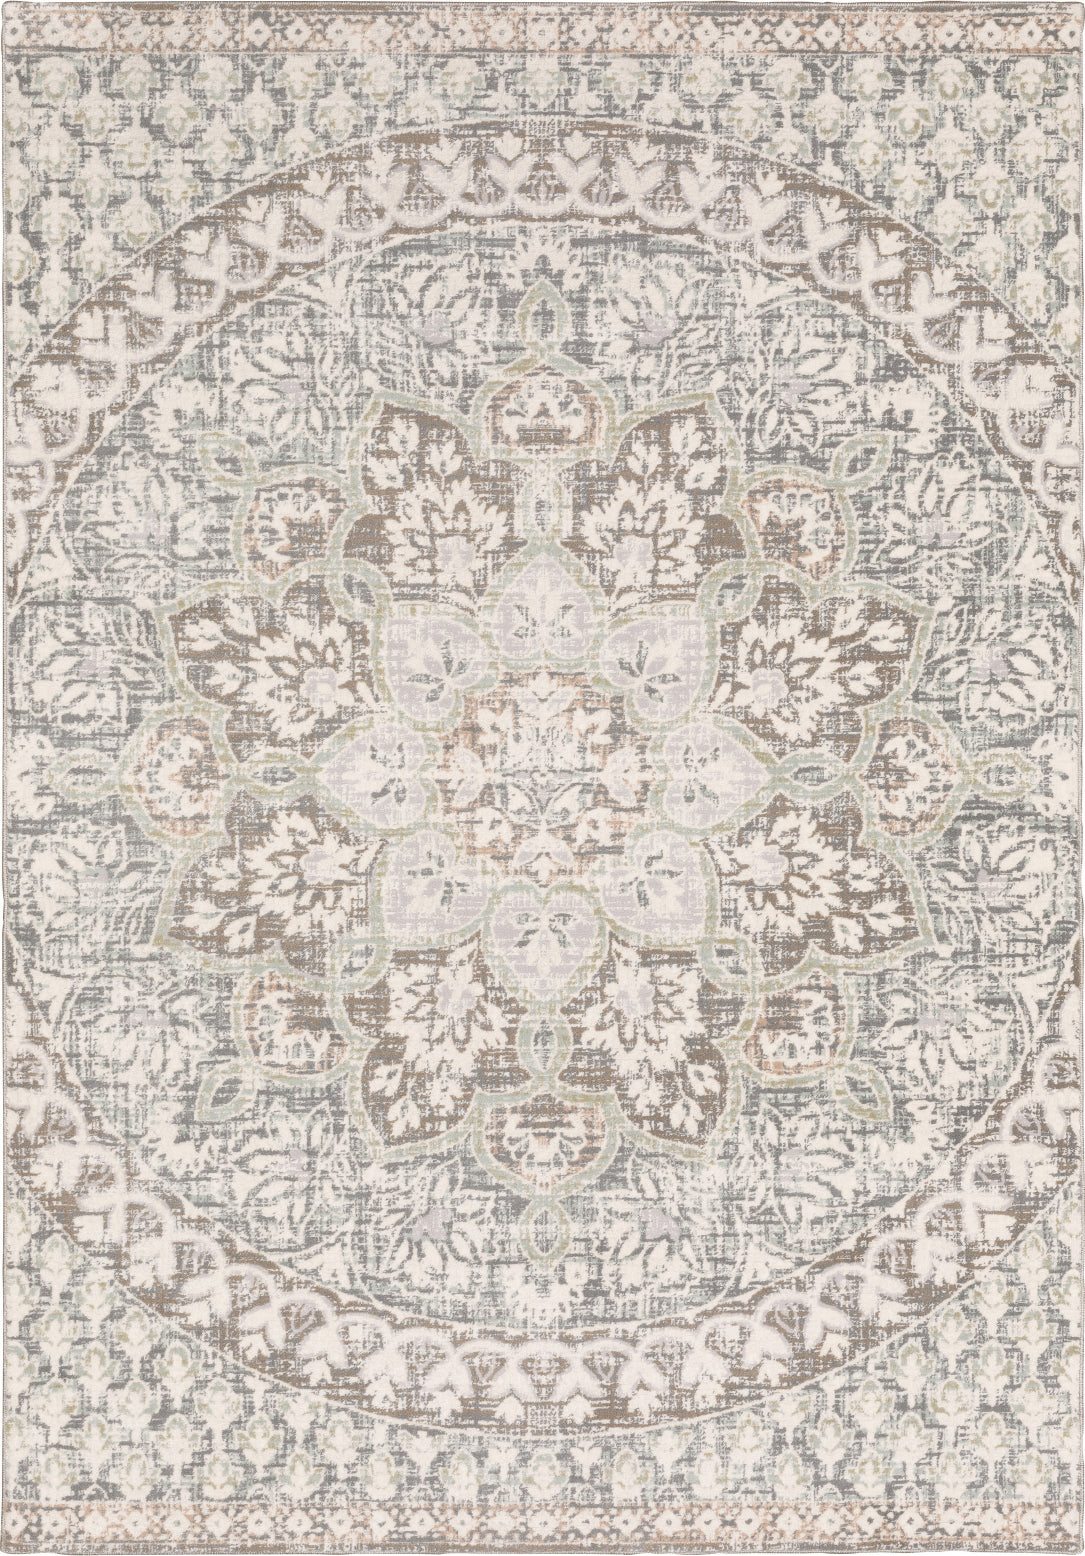 Oriental Weavers Capistrano 517B1 Ivory/Grey Area Rug main image Featured